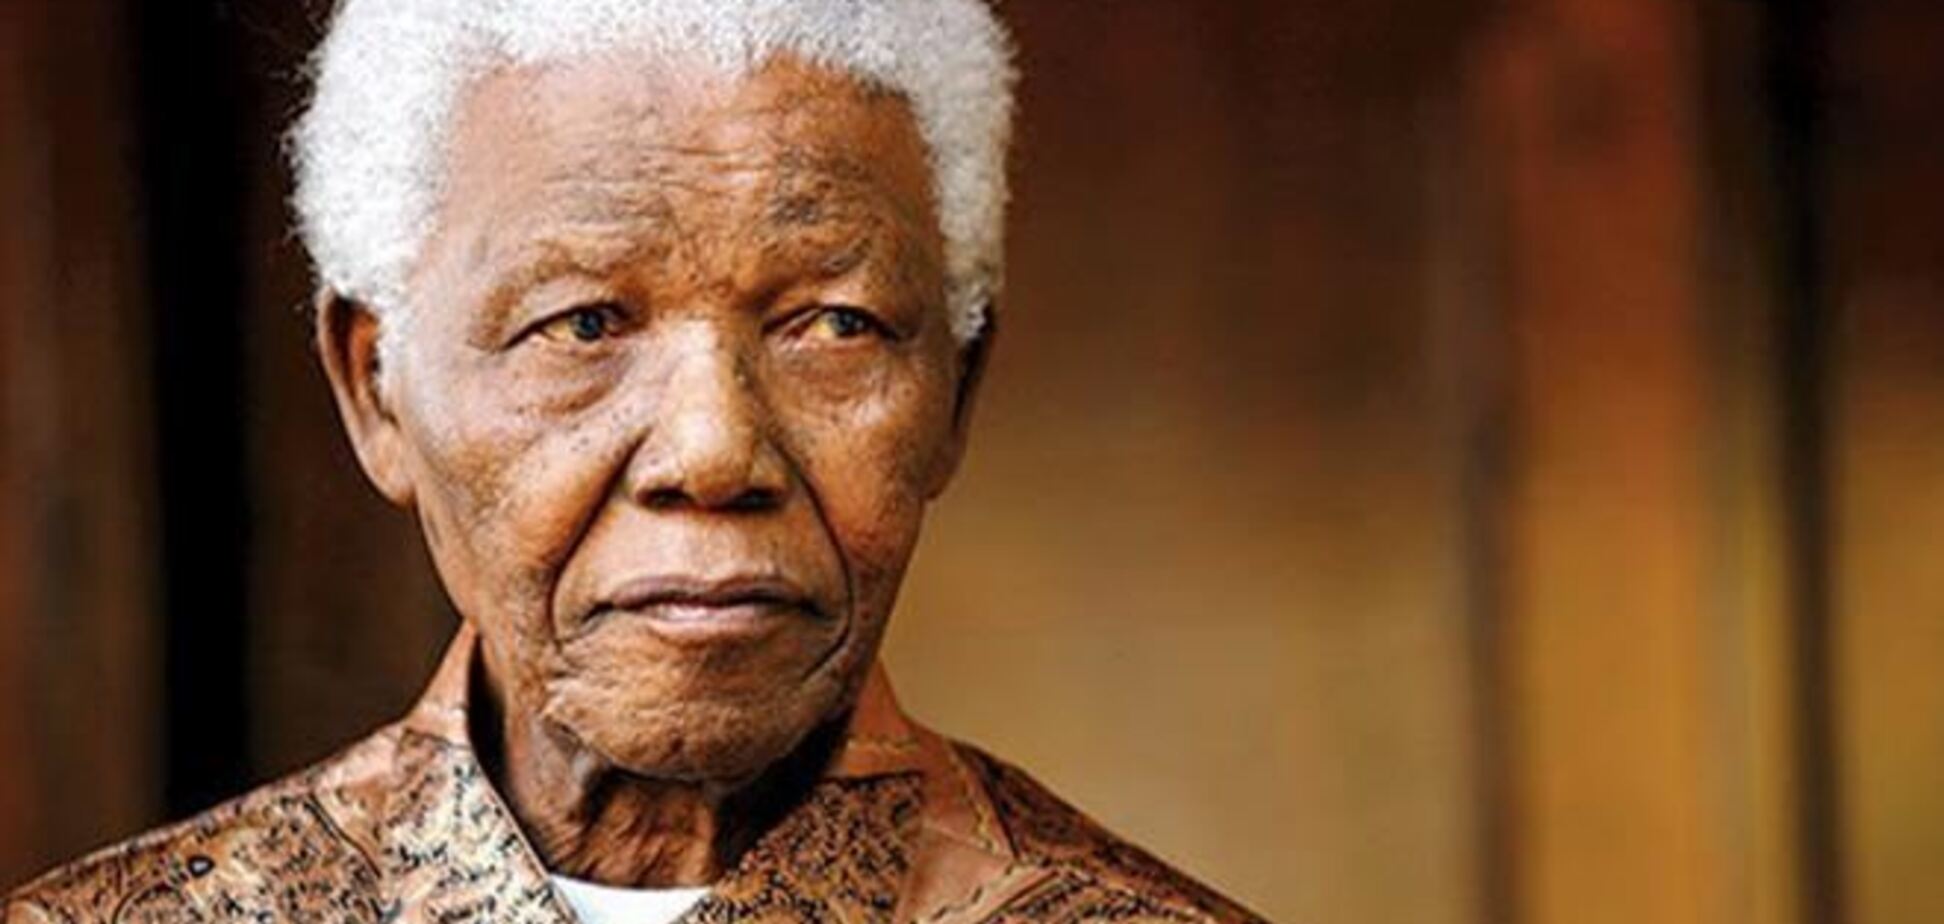 Екс-президент ПАР Нельсон Мандела не може говорити